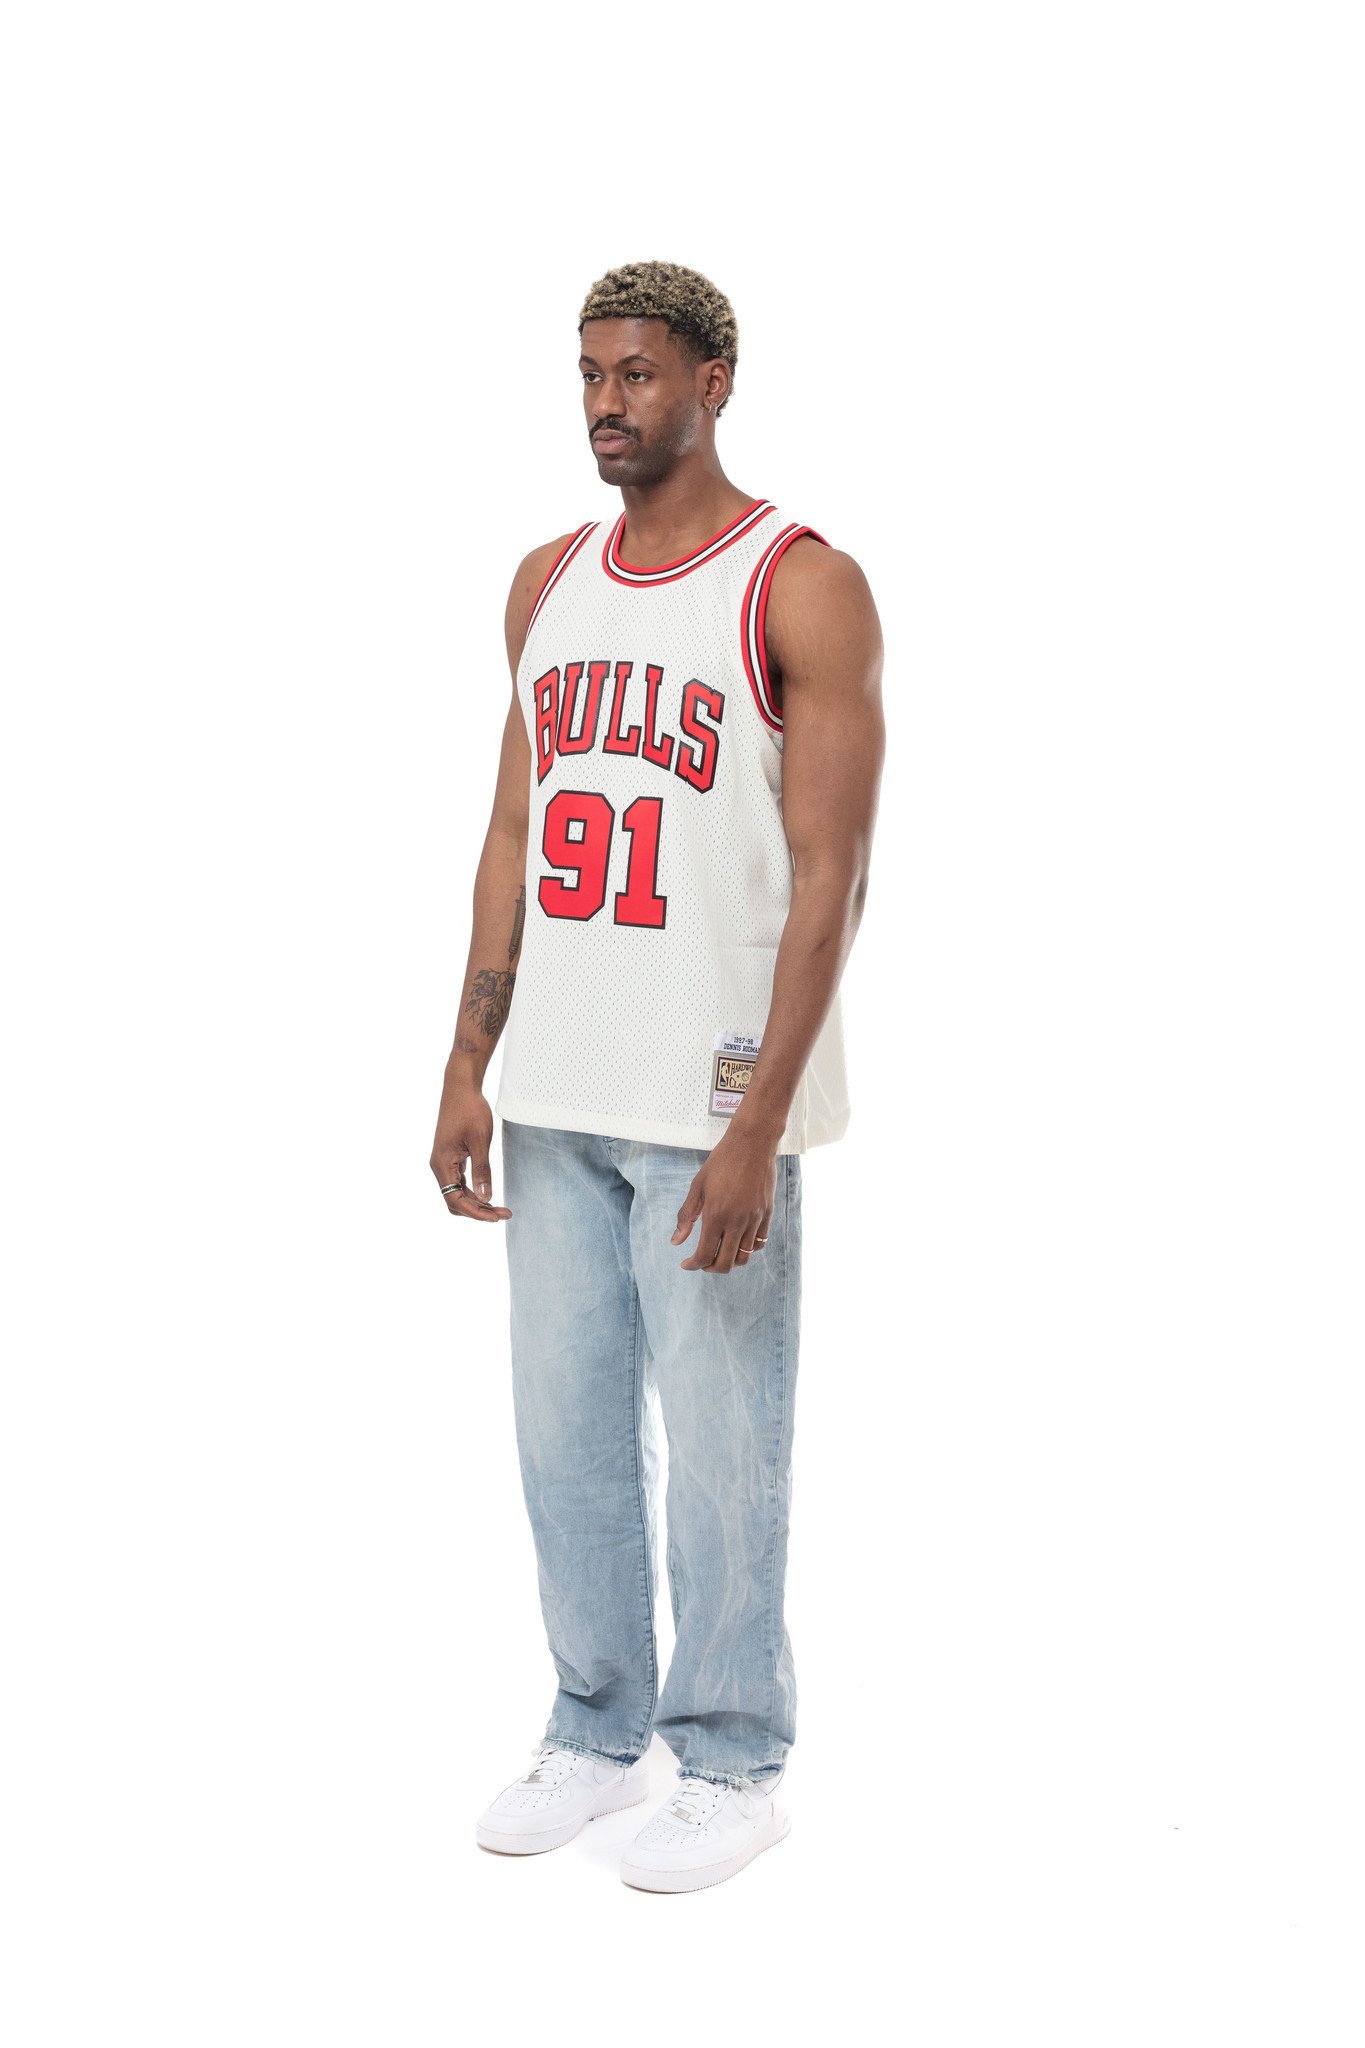 Chicago Bulls Dennis Rodman Mitchell & Ness Swingman Jersey 